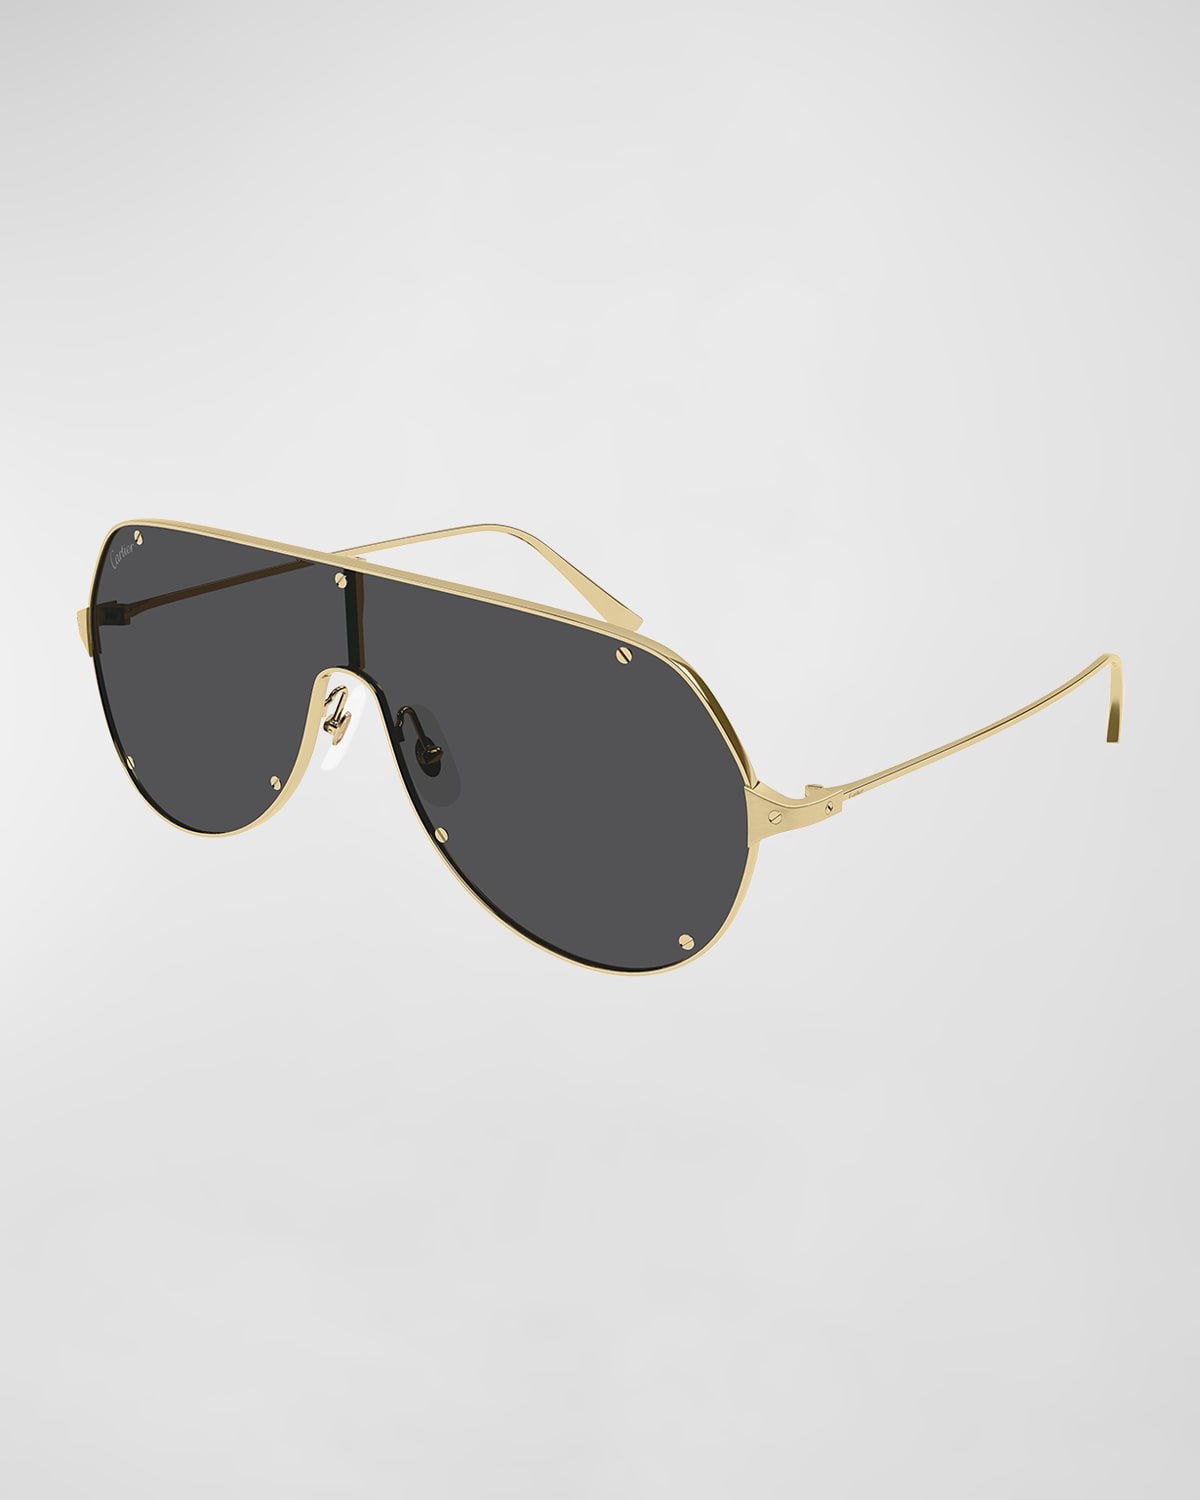 Italy Design Fashion Metal Gold Brown Square Sunglasses Shades Womens Mens Retro 